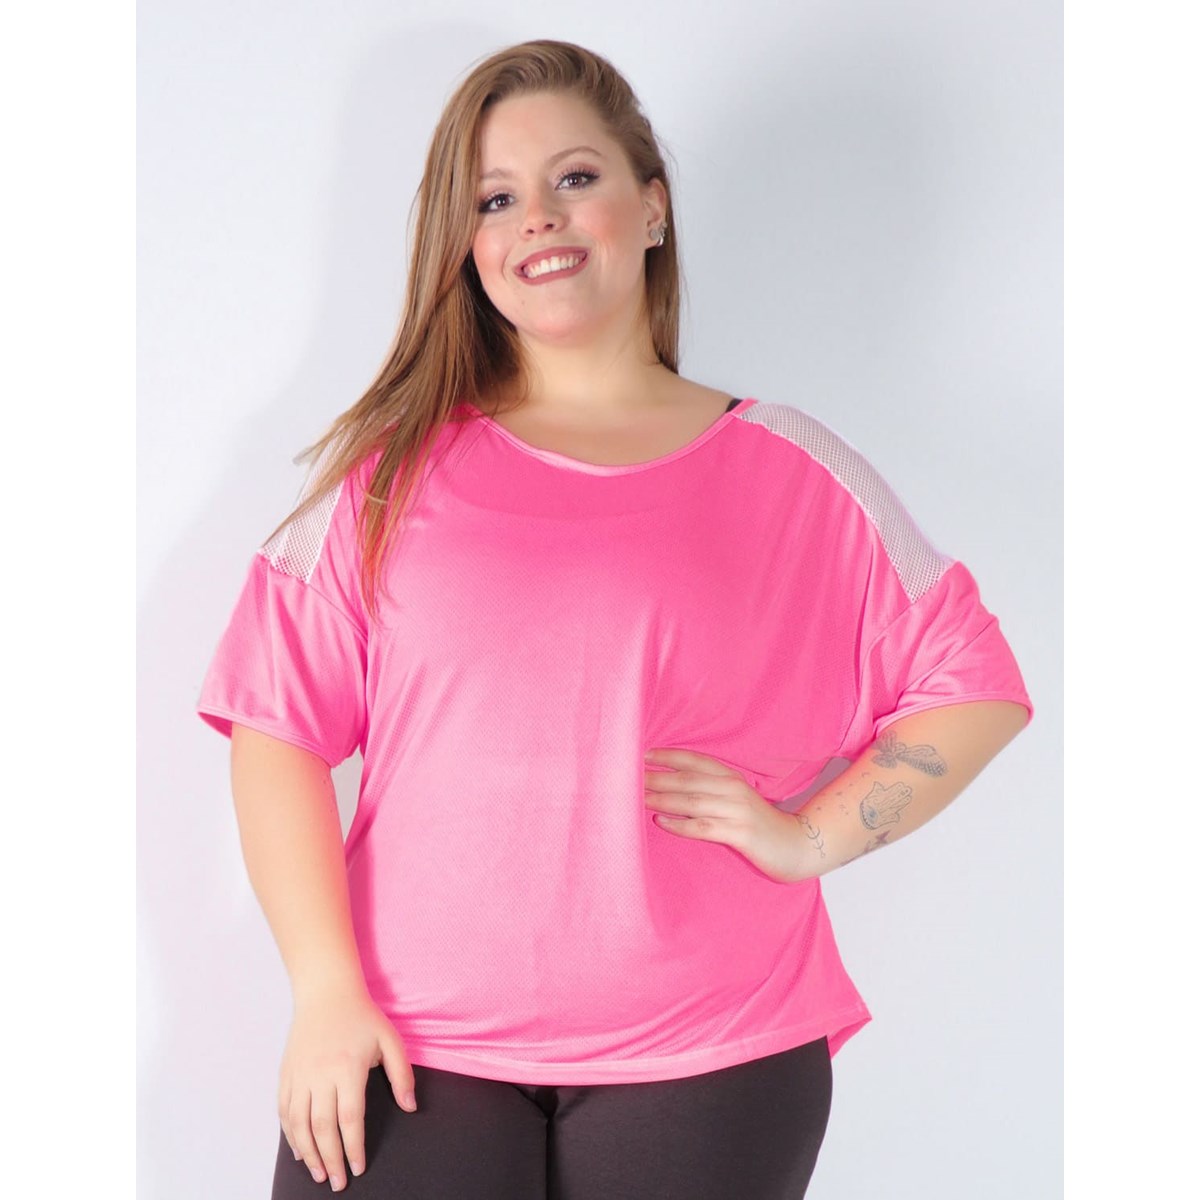 Blusa Fitness Plus Size Rosa Neon com Tela Branca | Ref: 4.4.4143-3902